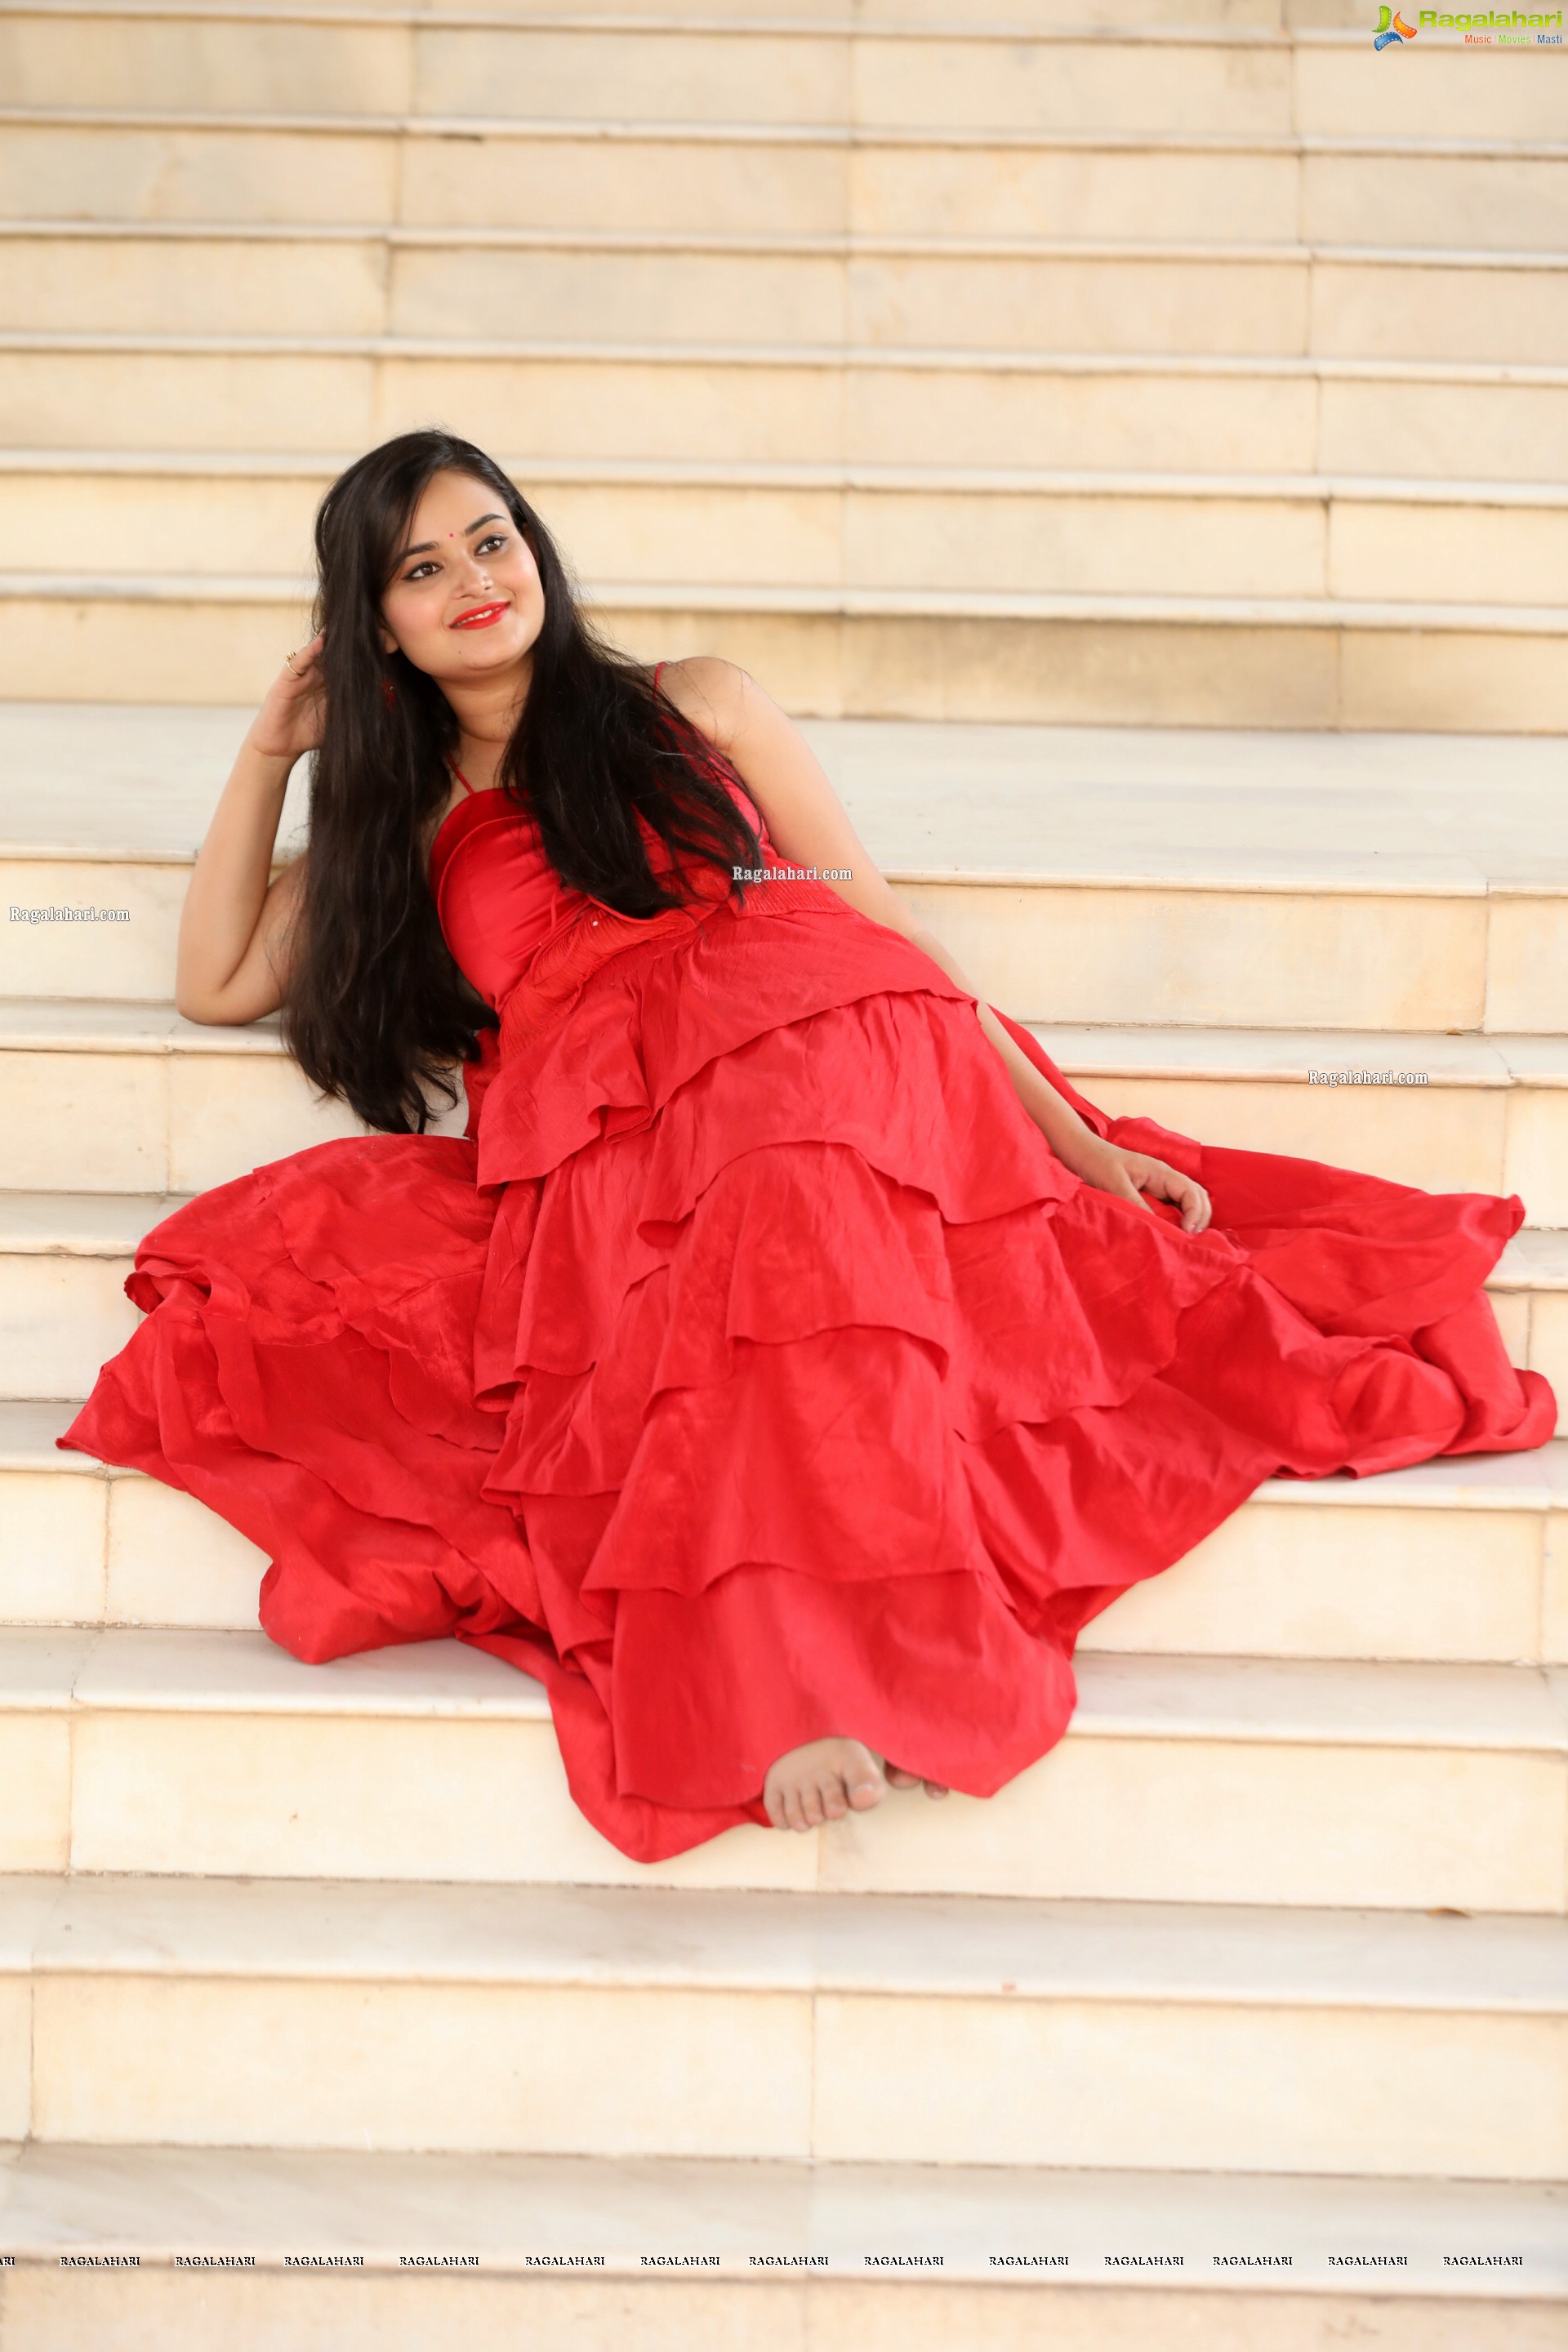 Vaanya Aggarwal in Red Ruffle Dress, HD Photo Gallery